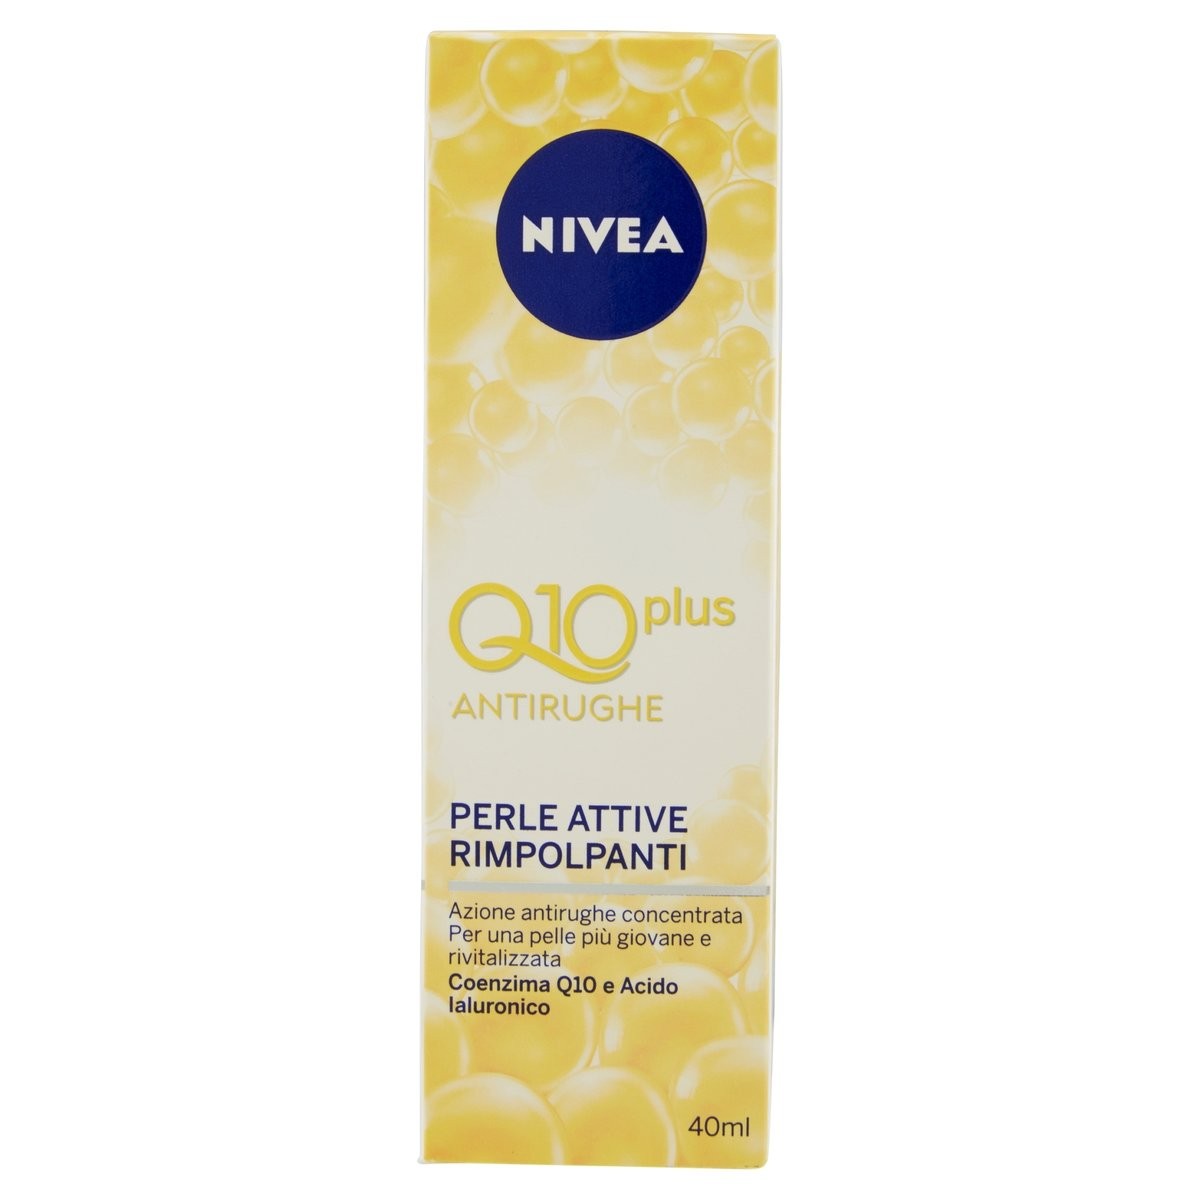 Nivea Q10 plus Perle attive rimpolpanti antirughe